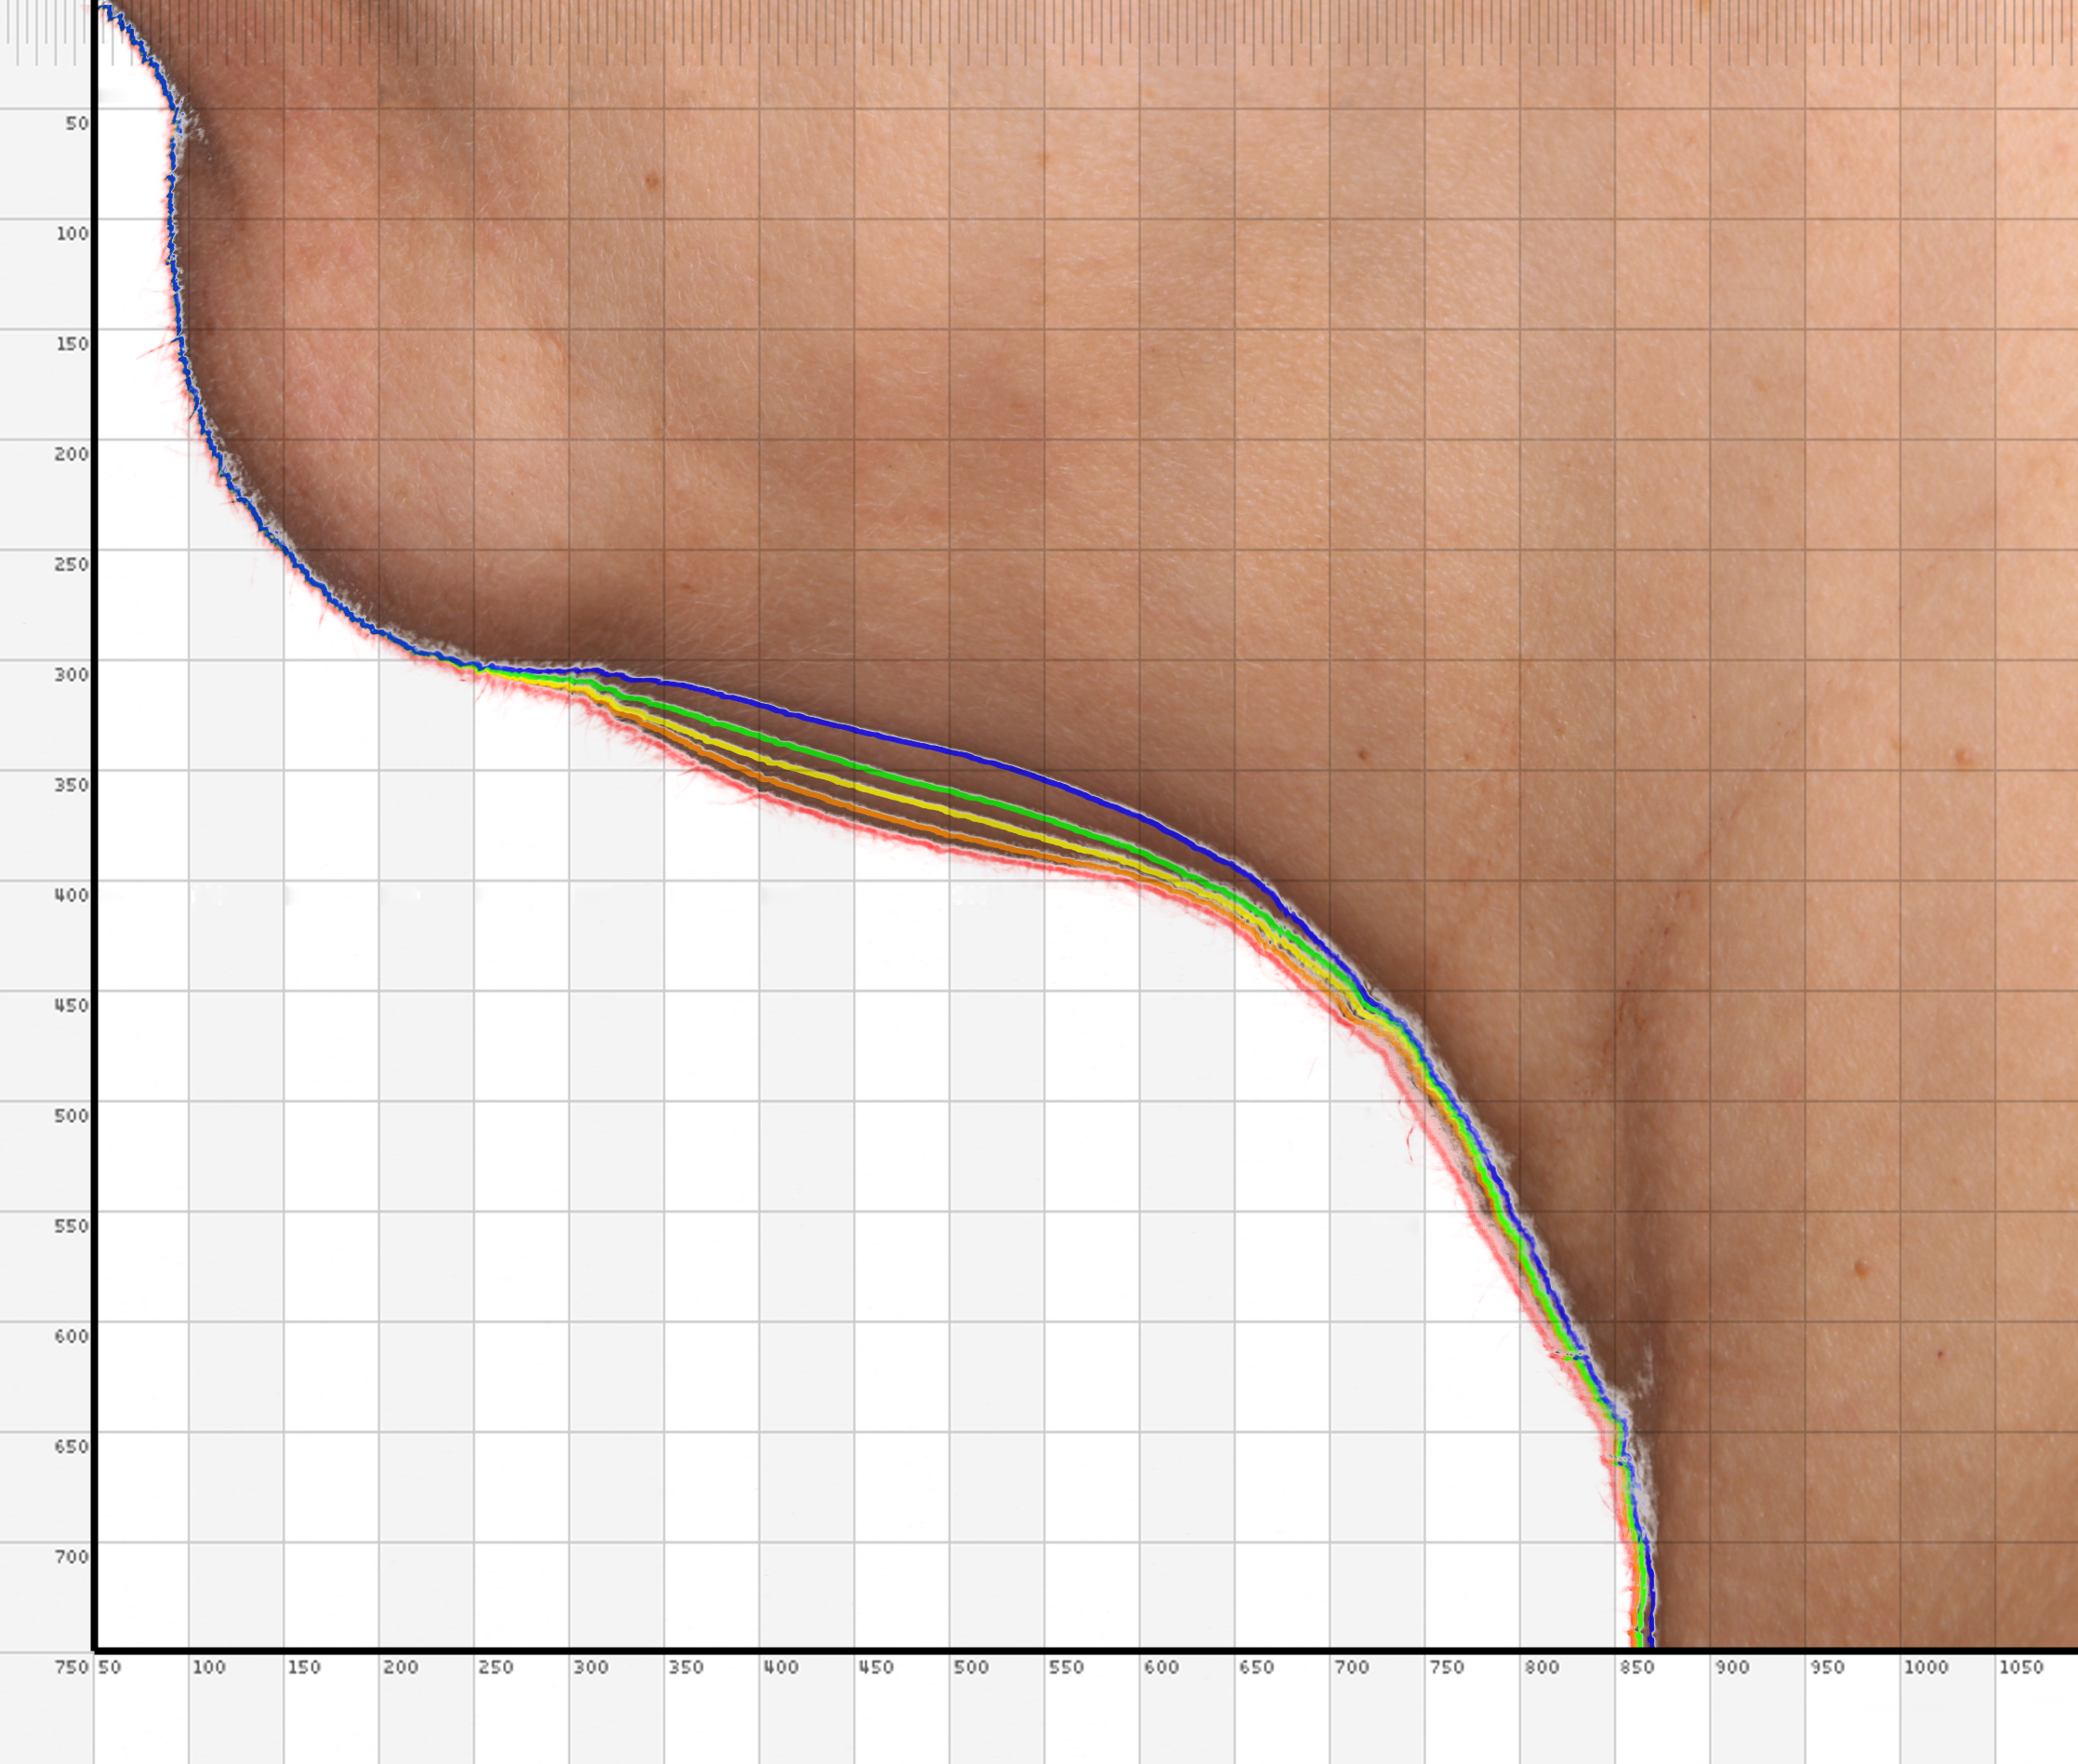 CMA02 neck analysis